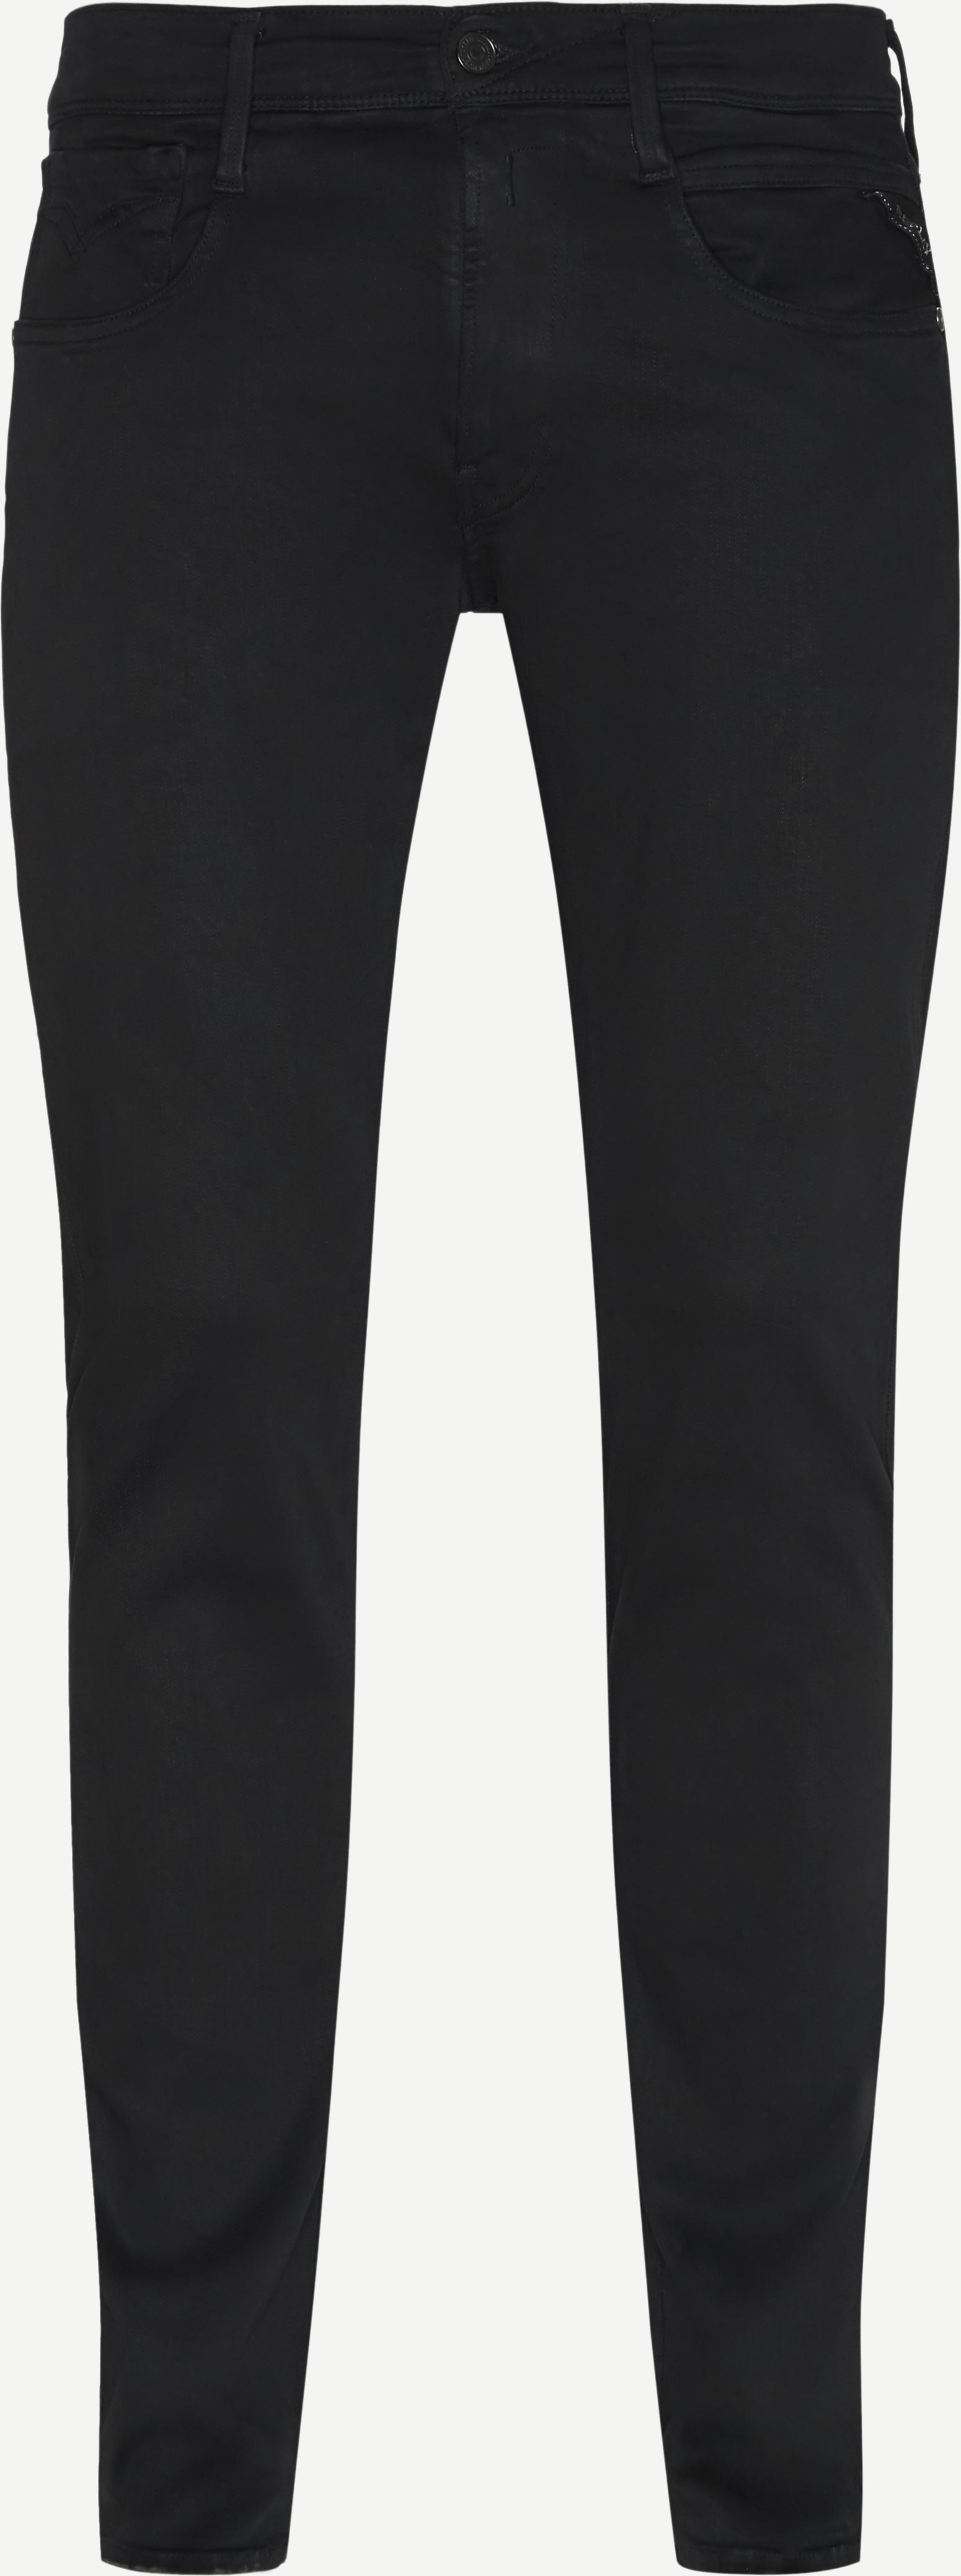 Anbass Hyperflex Jeans - Jeans - Slim fit - Black